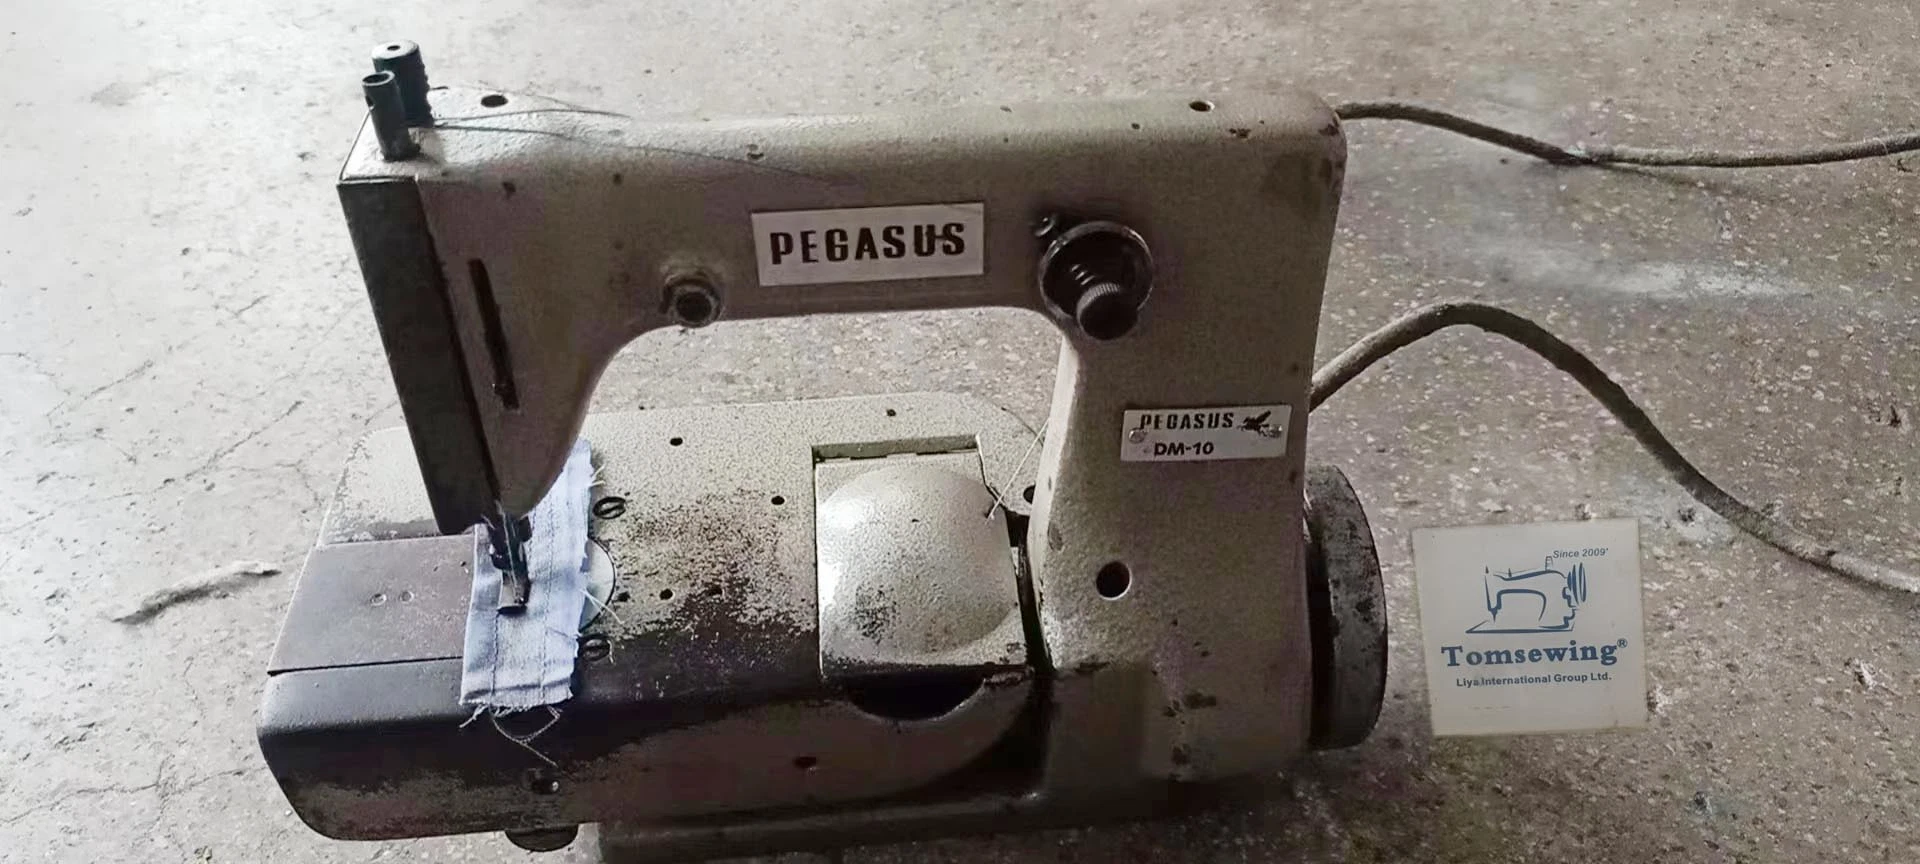 Used Glove Sewing Machine Second Hand Chainstitch Pegasus Dm-10 Maquinas De Coser Industriales Usedas